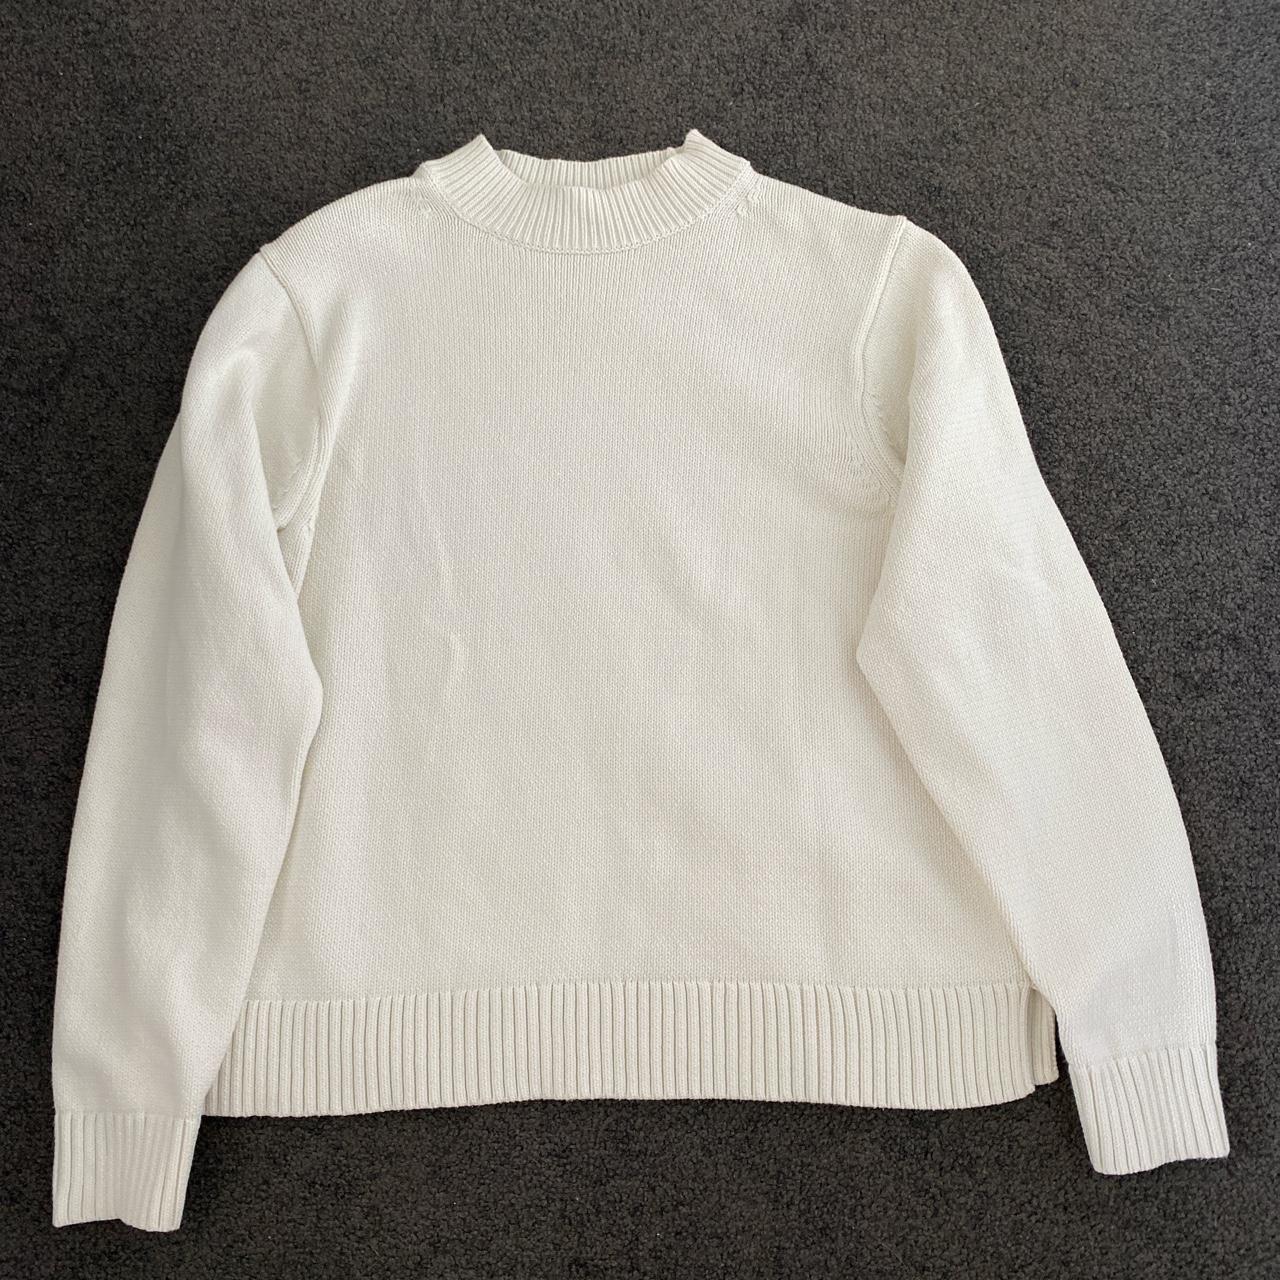 UNIQLO - high neck white sweater, size - s - Depop